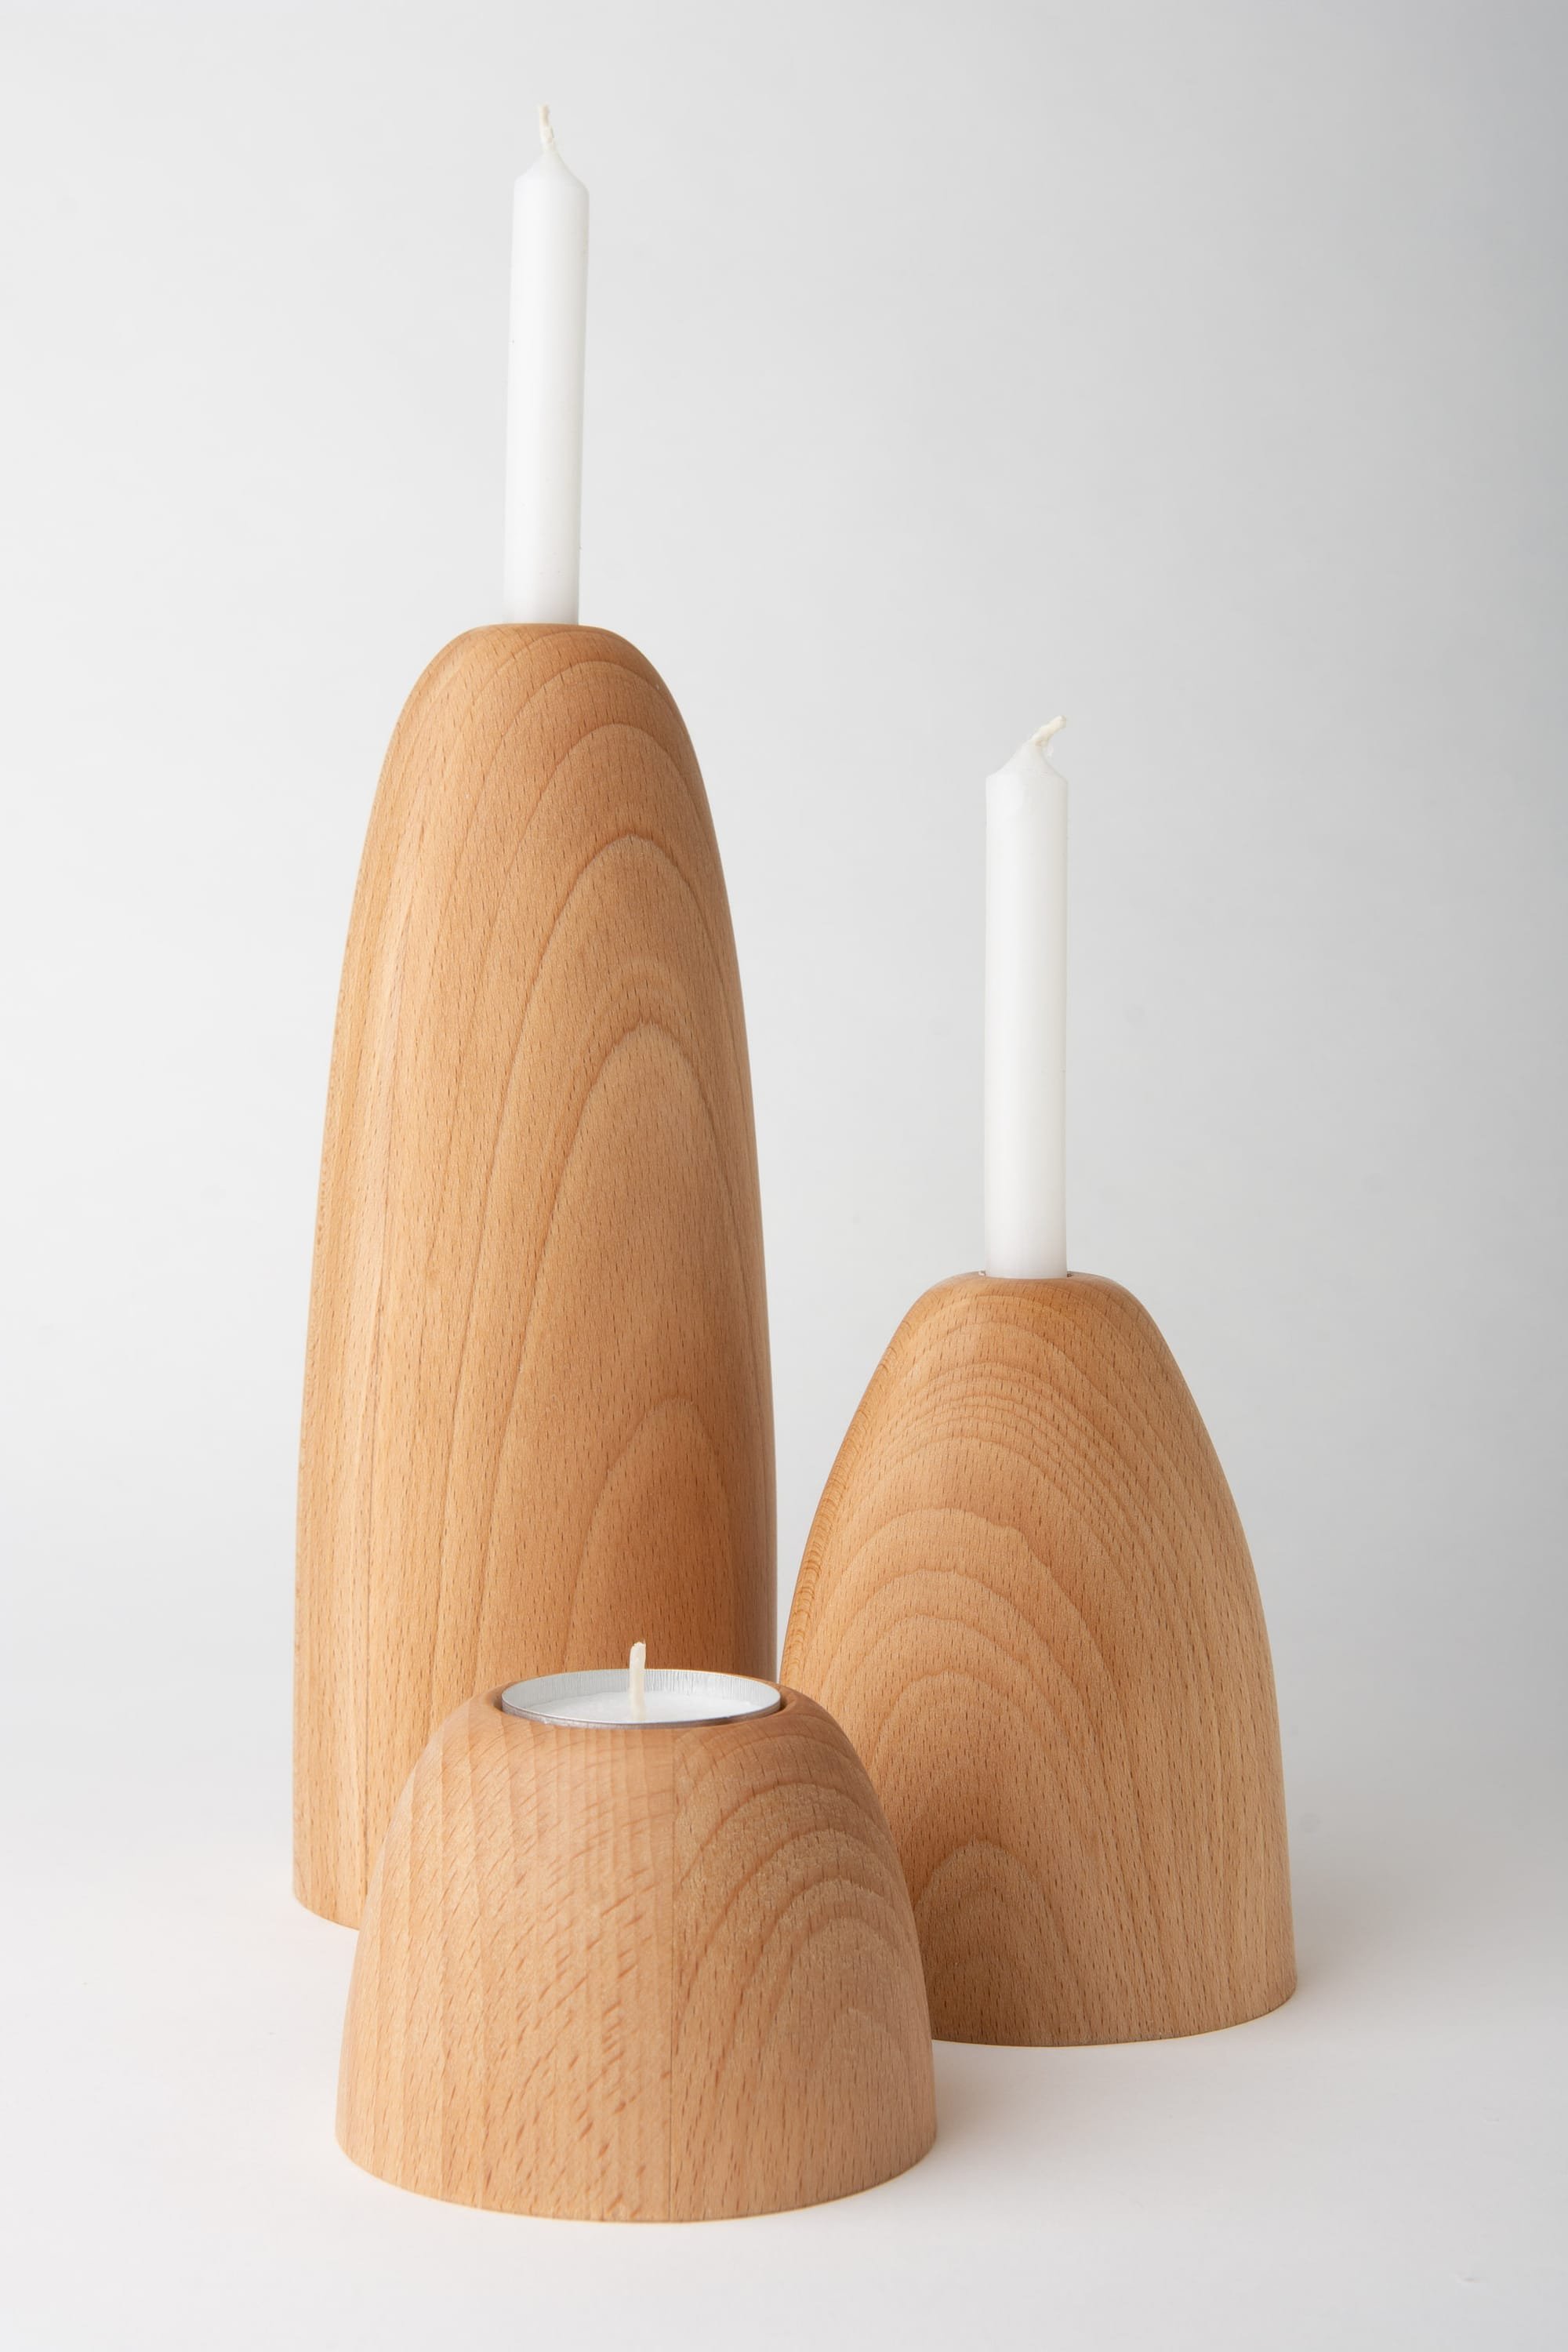 Minimalist wooden candle holder